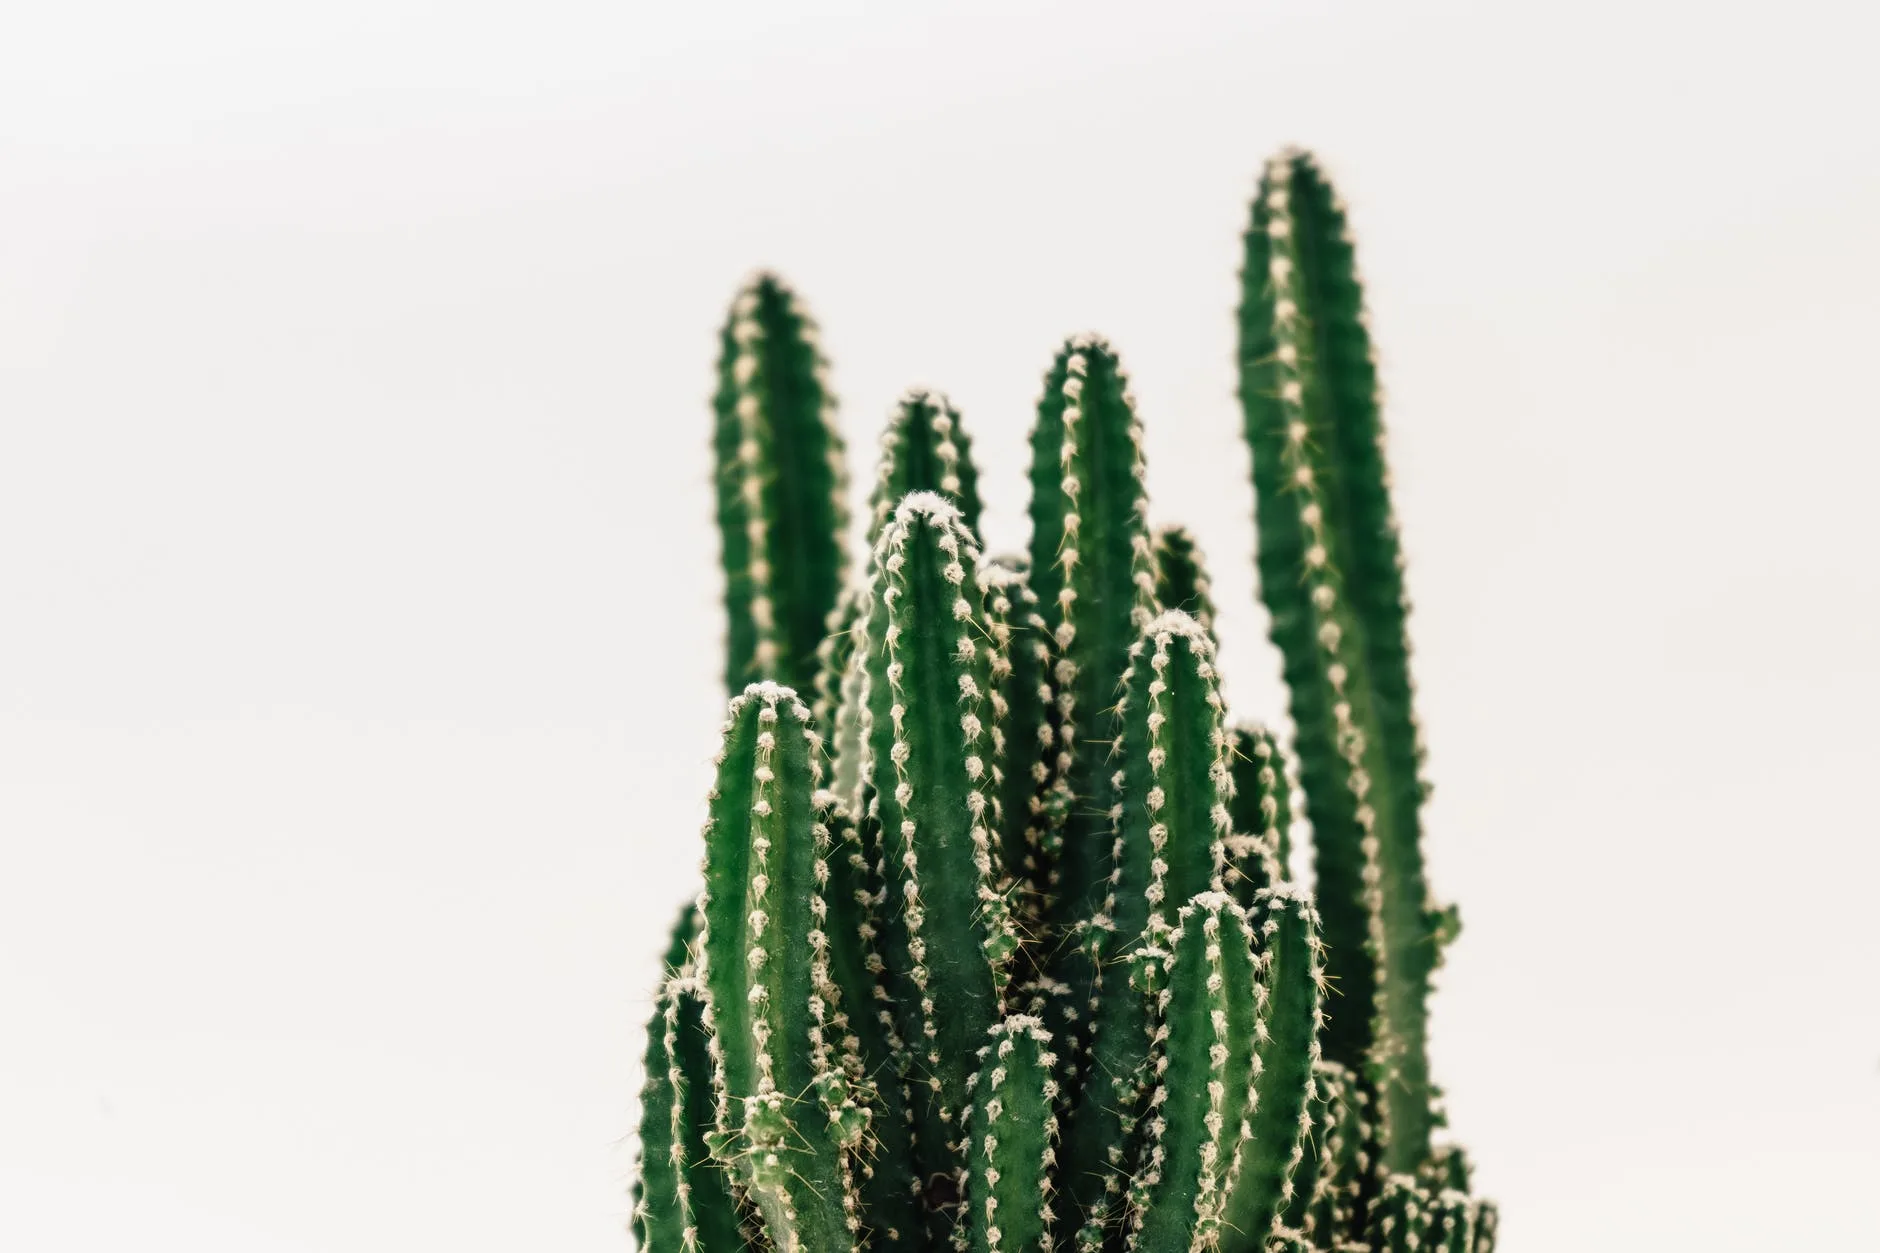 close up photography of cactus